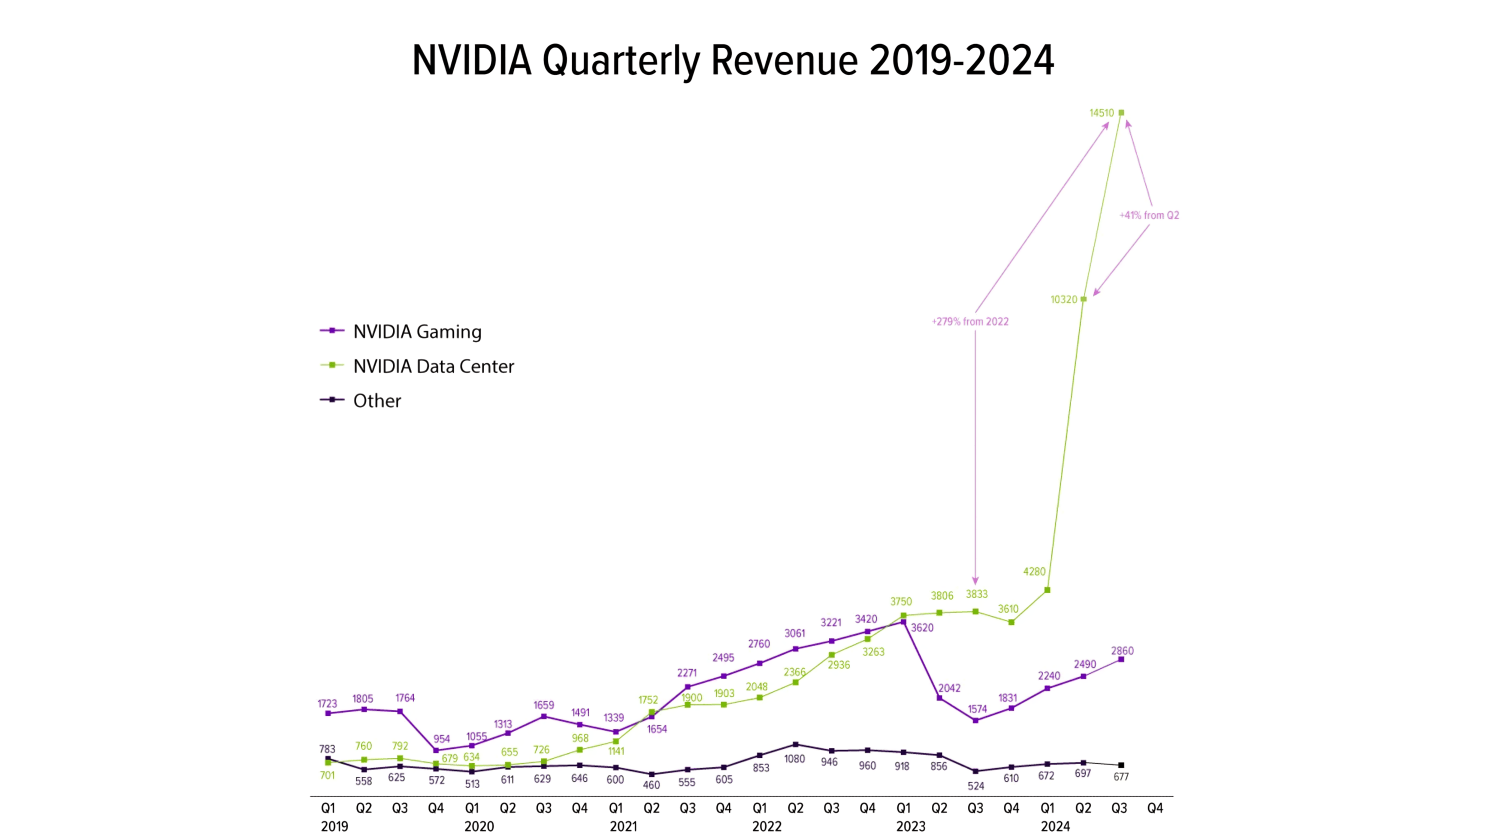 NVIDIA's Revenue Growth